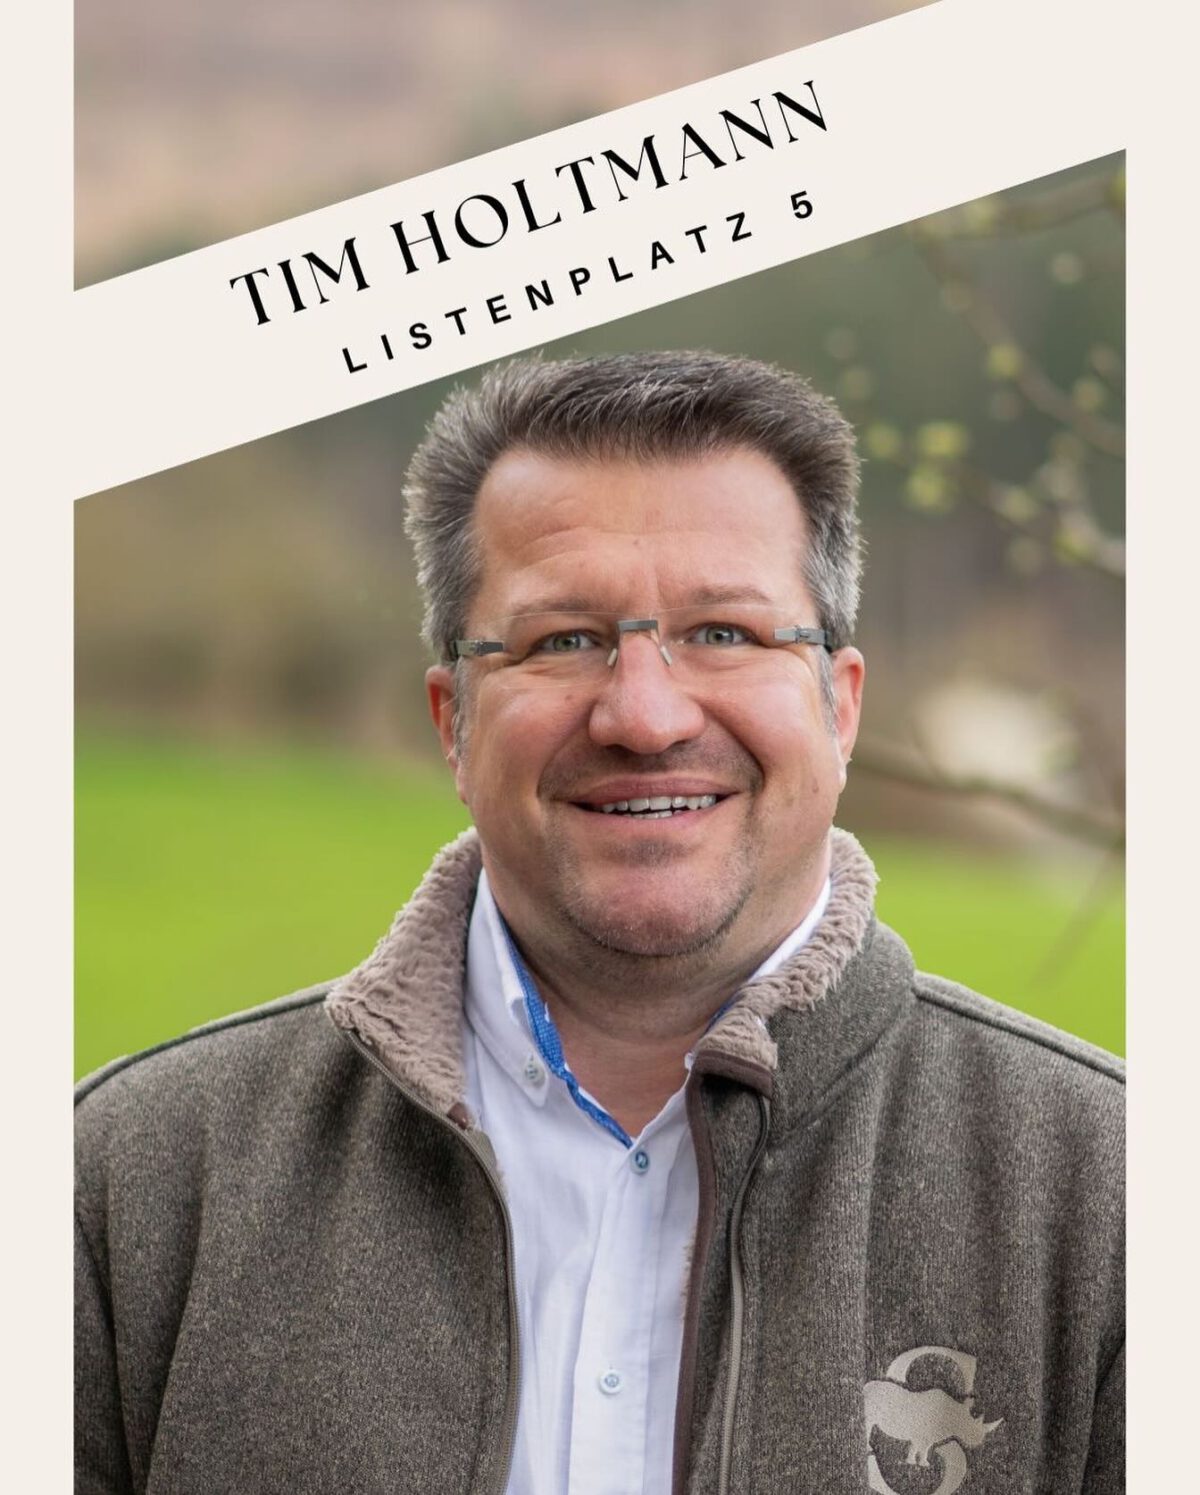 Kandidat Tim Holtmann